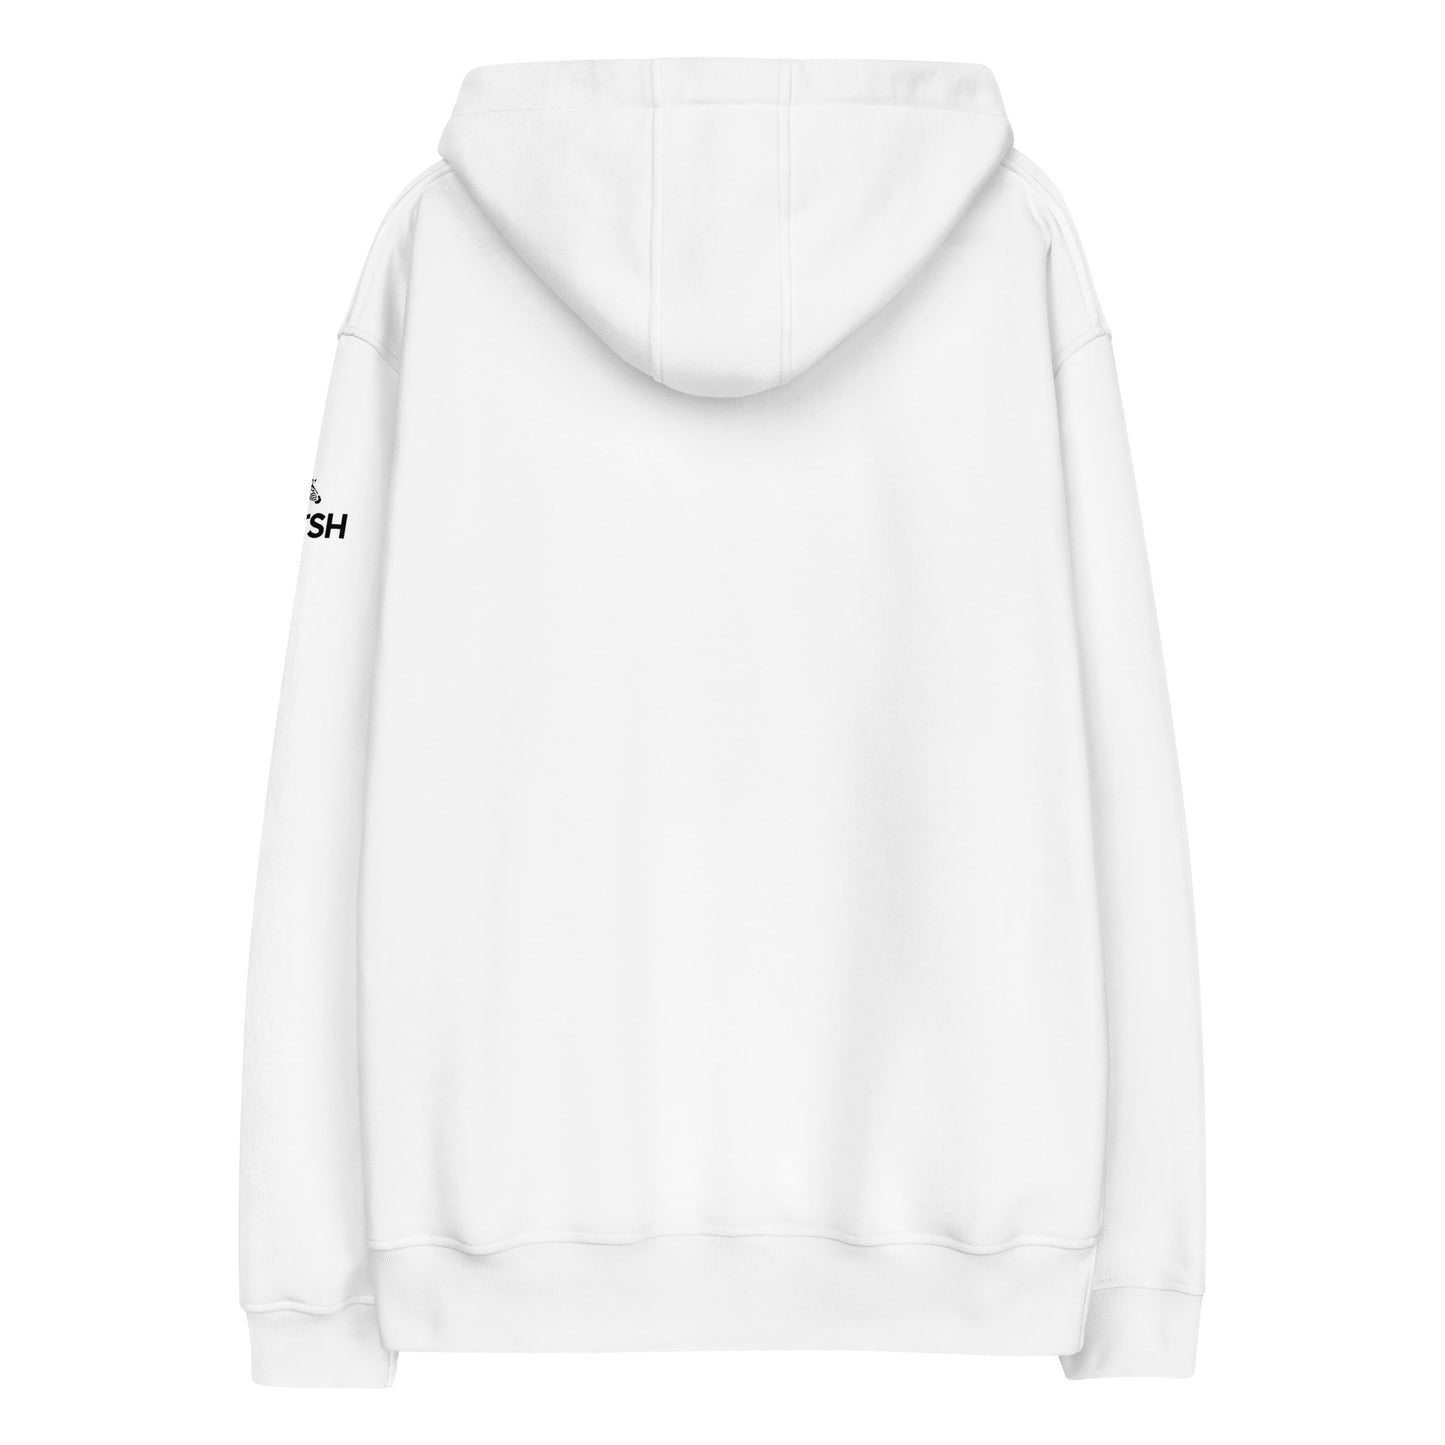 Organic "AUNTIE" Premium Sweatshirt Hoodie